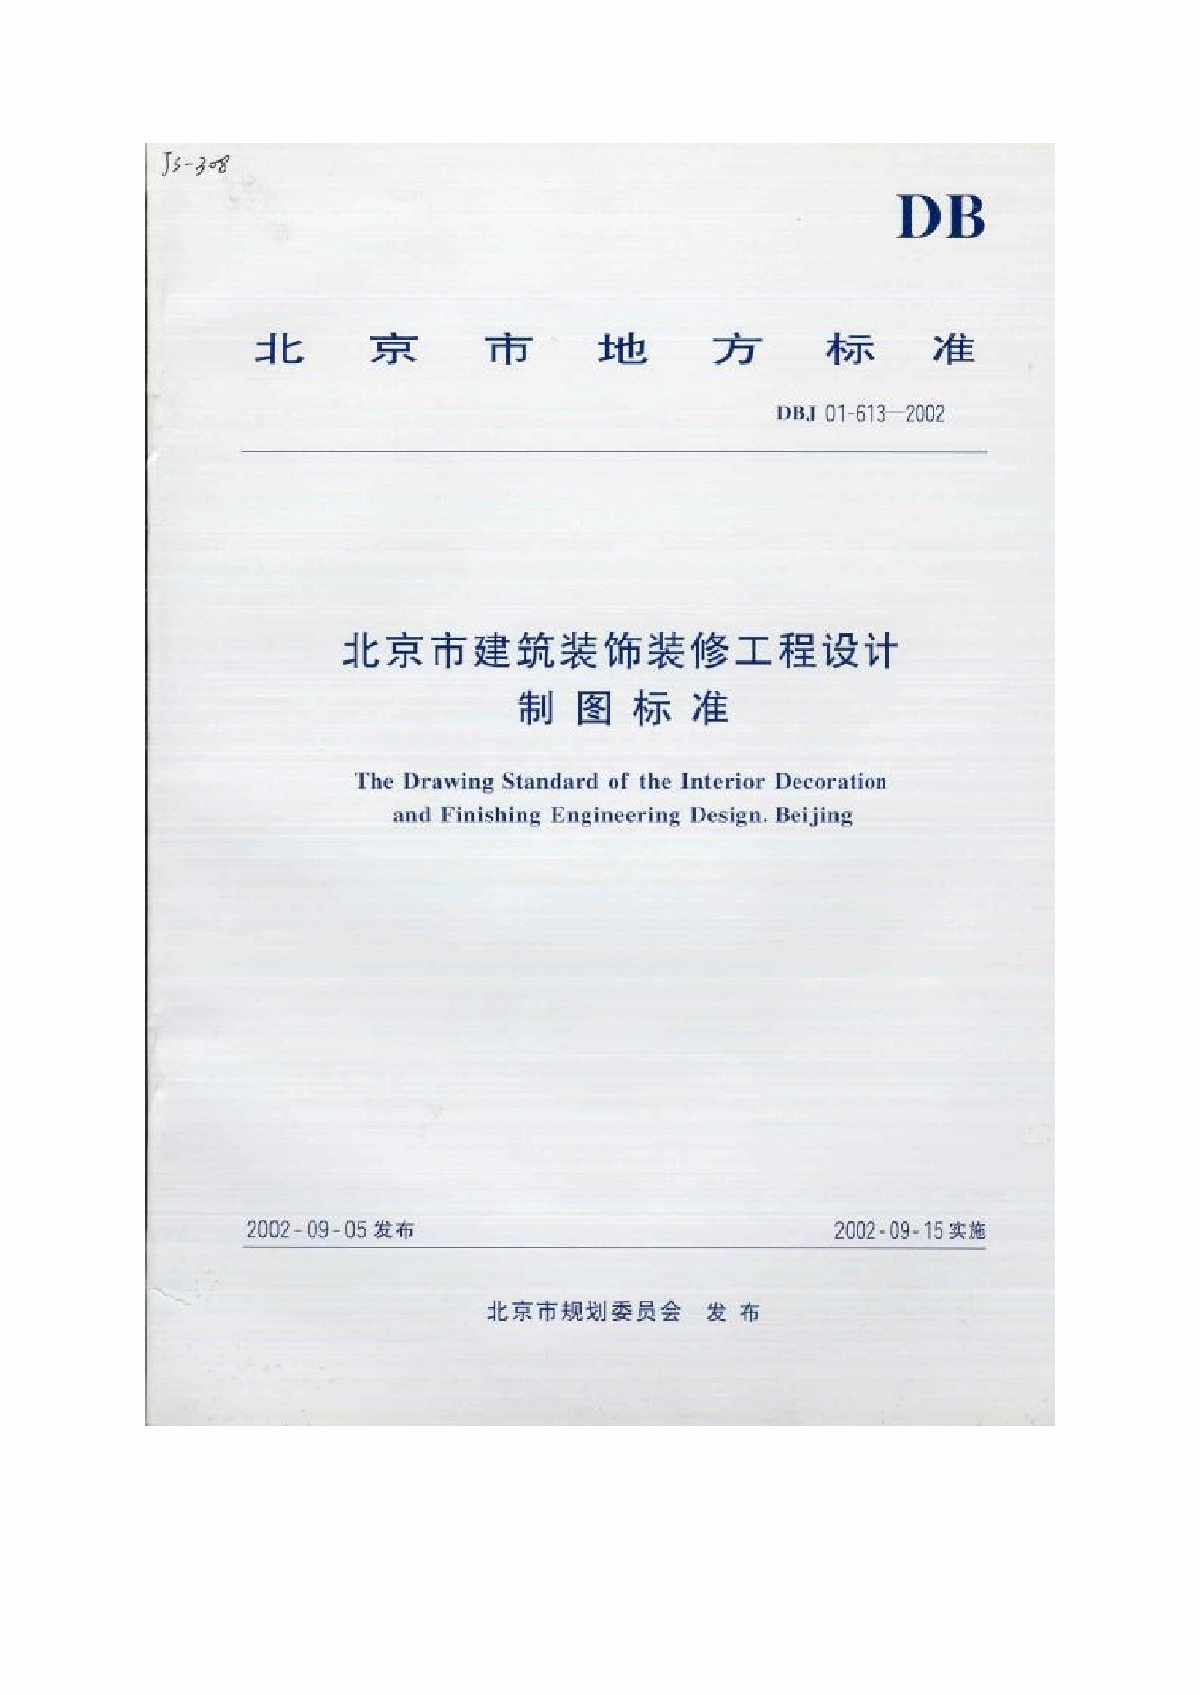 DBJ 01-63-2002 北京市建筑装饰装修工程设计制图标准-图一